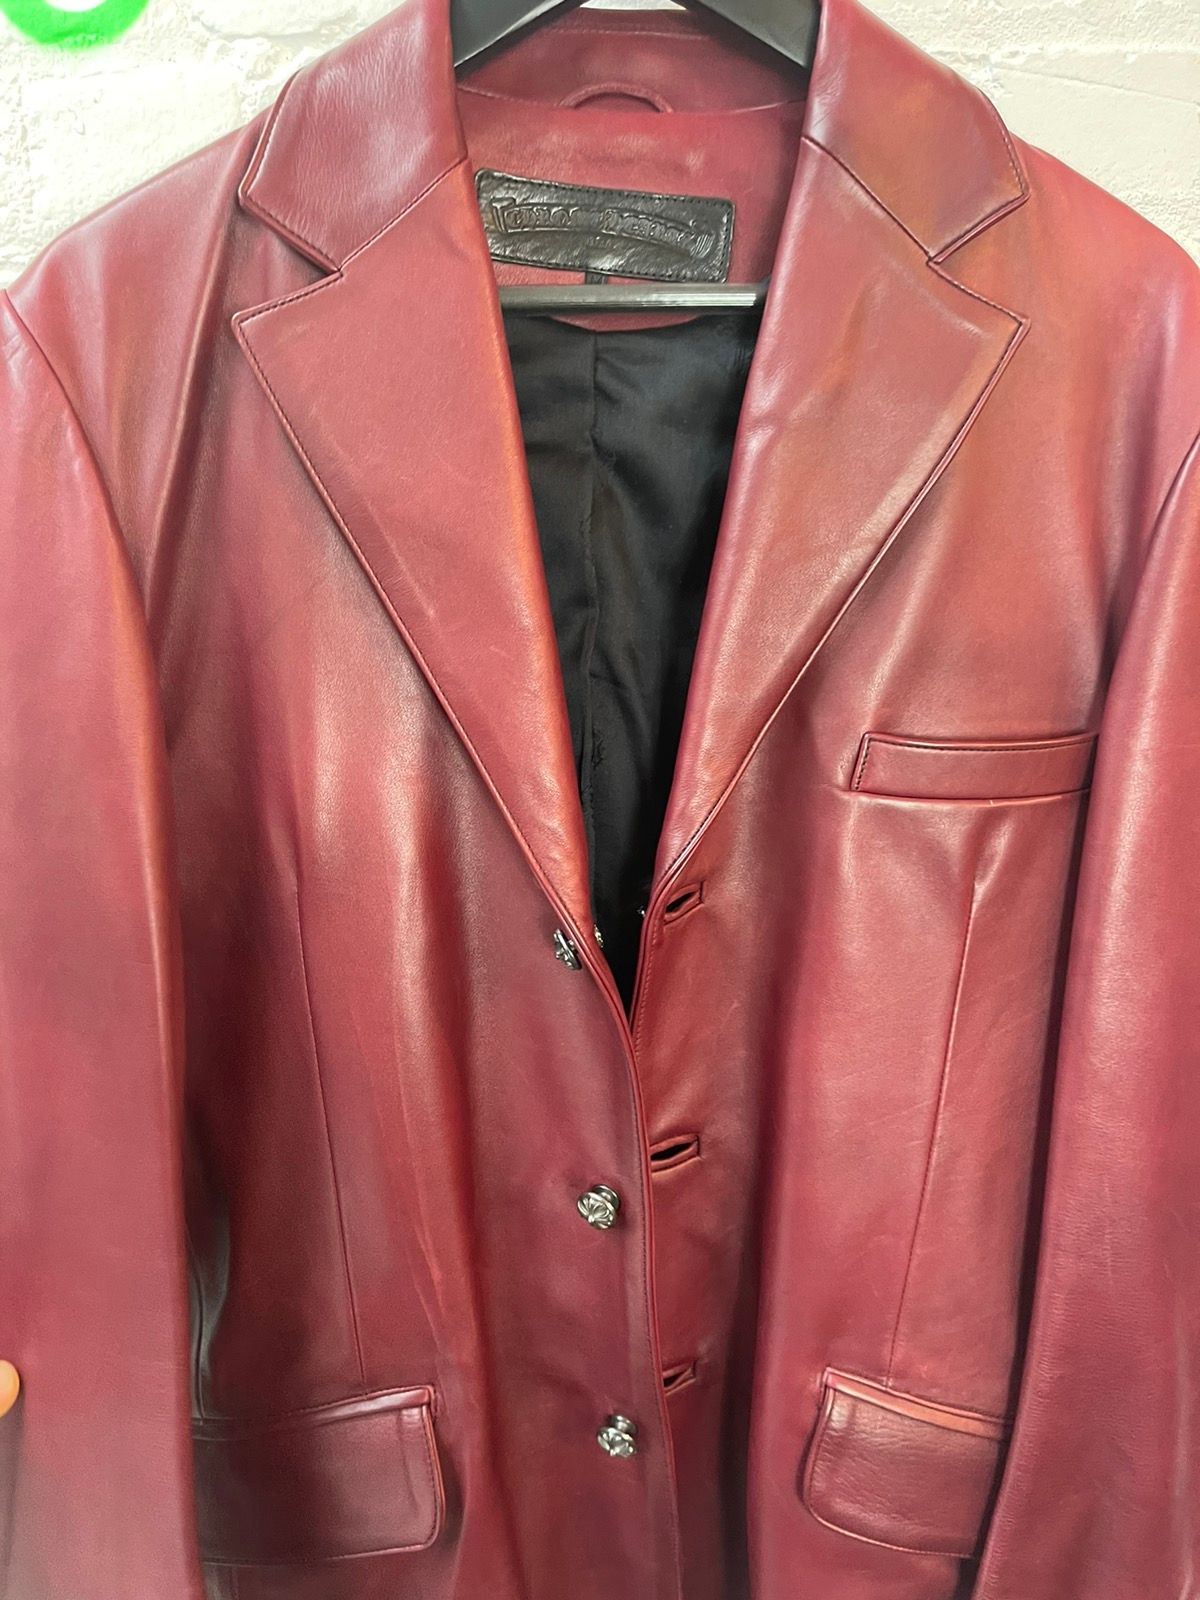 Chrome Hearts OxBlood Red Leather Blazer Jacket M